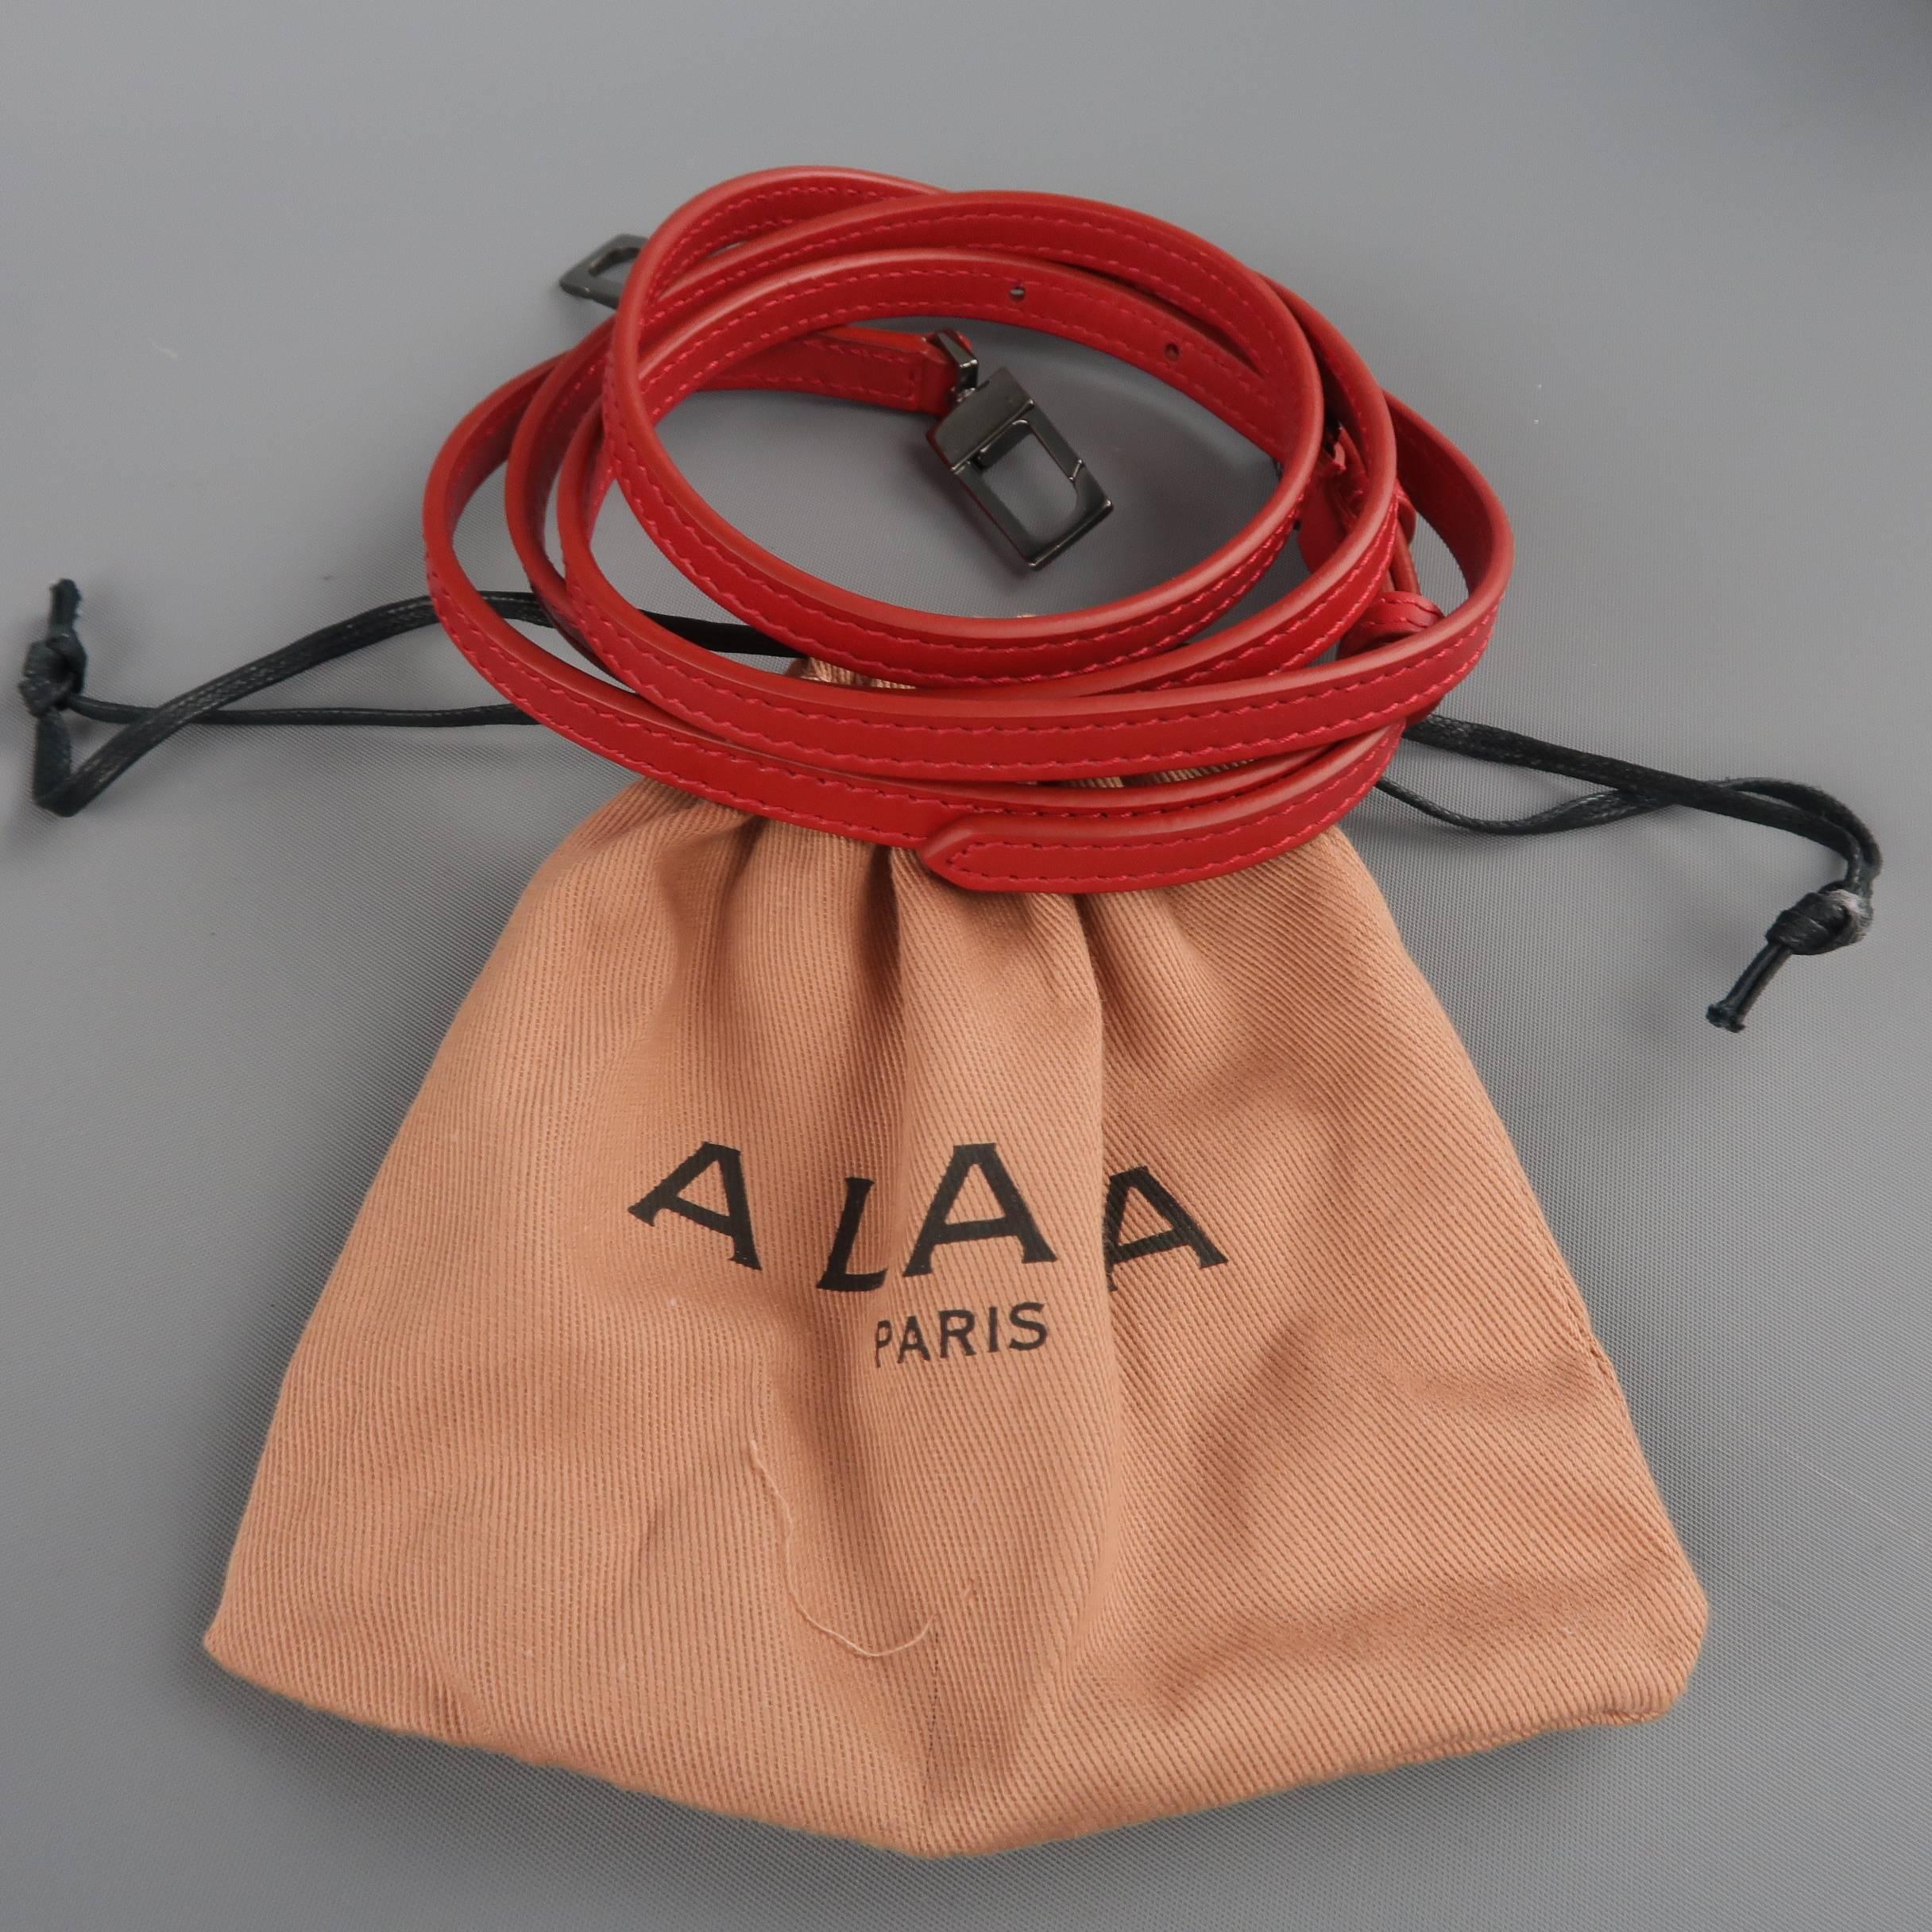 Alaia Red Perforated Leather Mini Top Handles Cross Body Handbag 10